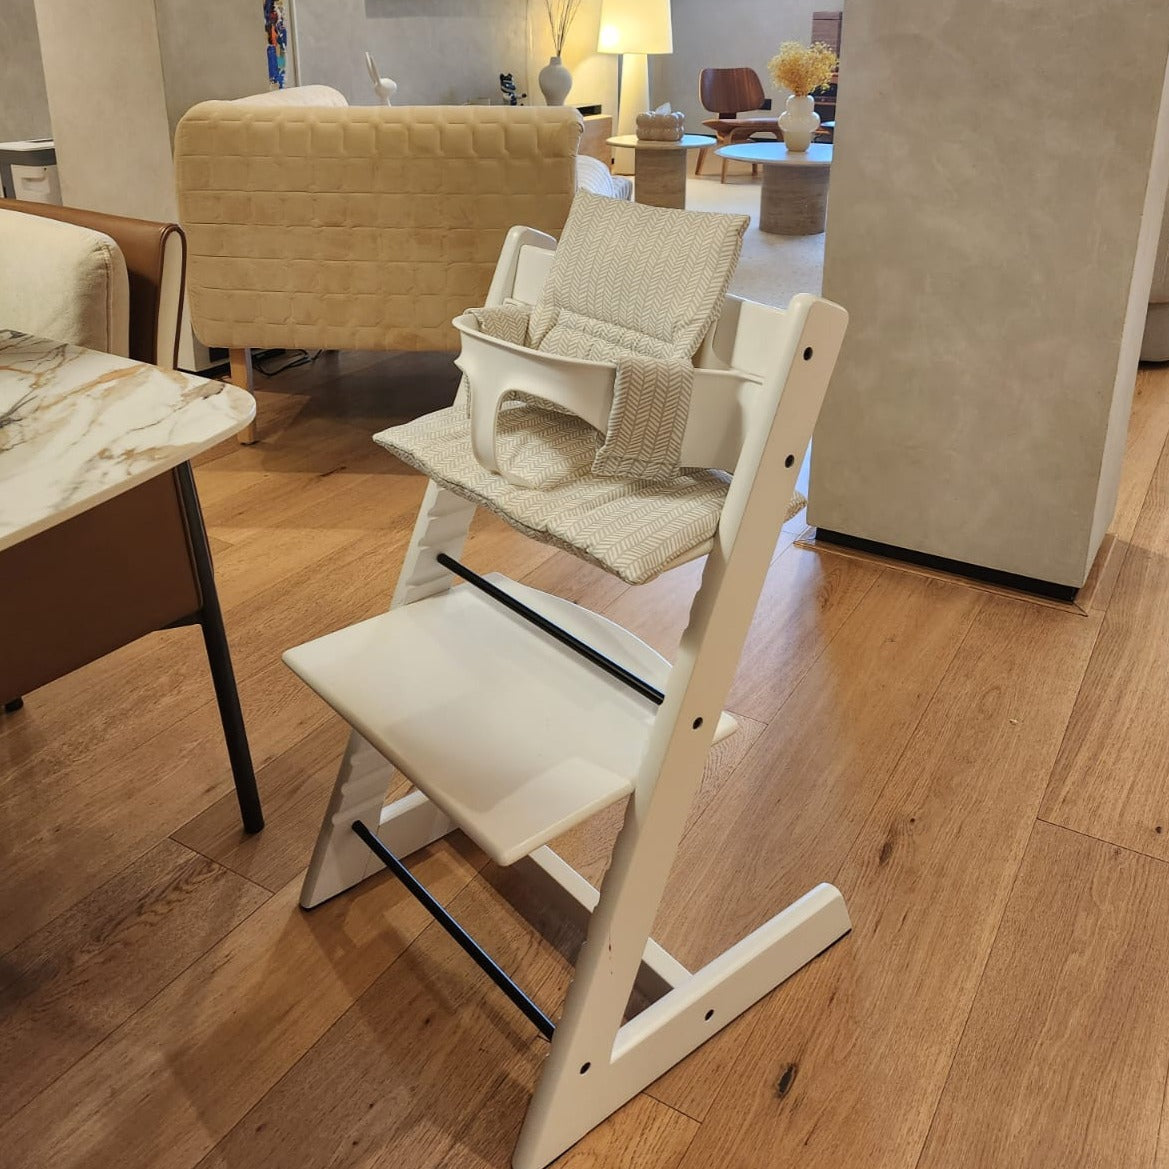 Wooden High Chair Accessories - Seat Cushion